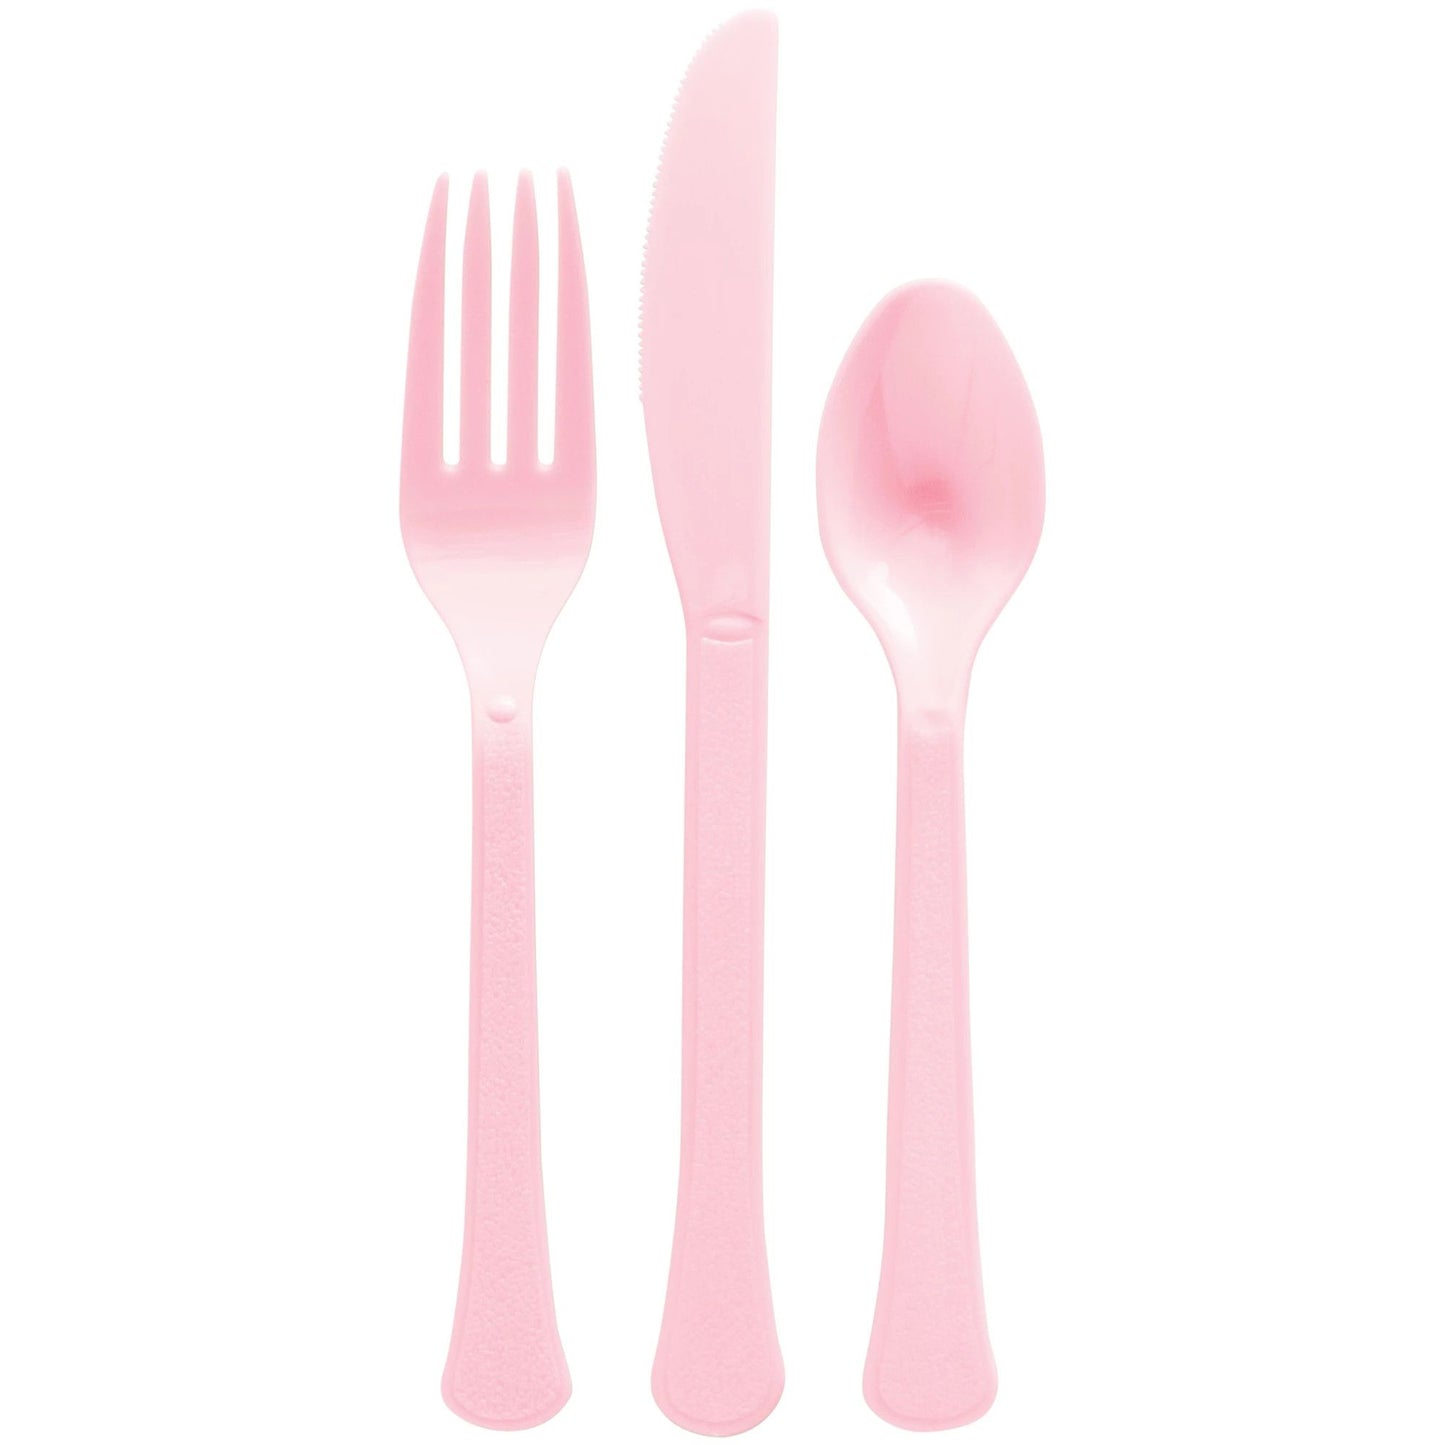 Heavy Weight Cutlery Asst., High Ct. - New Pink 200 Ct